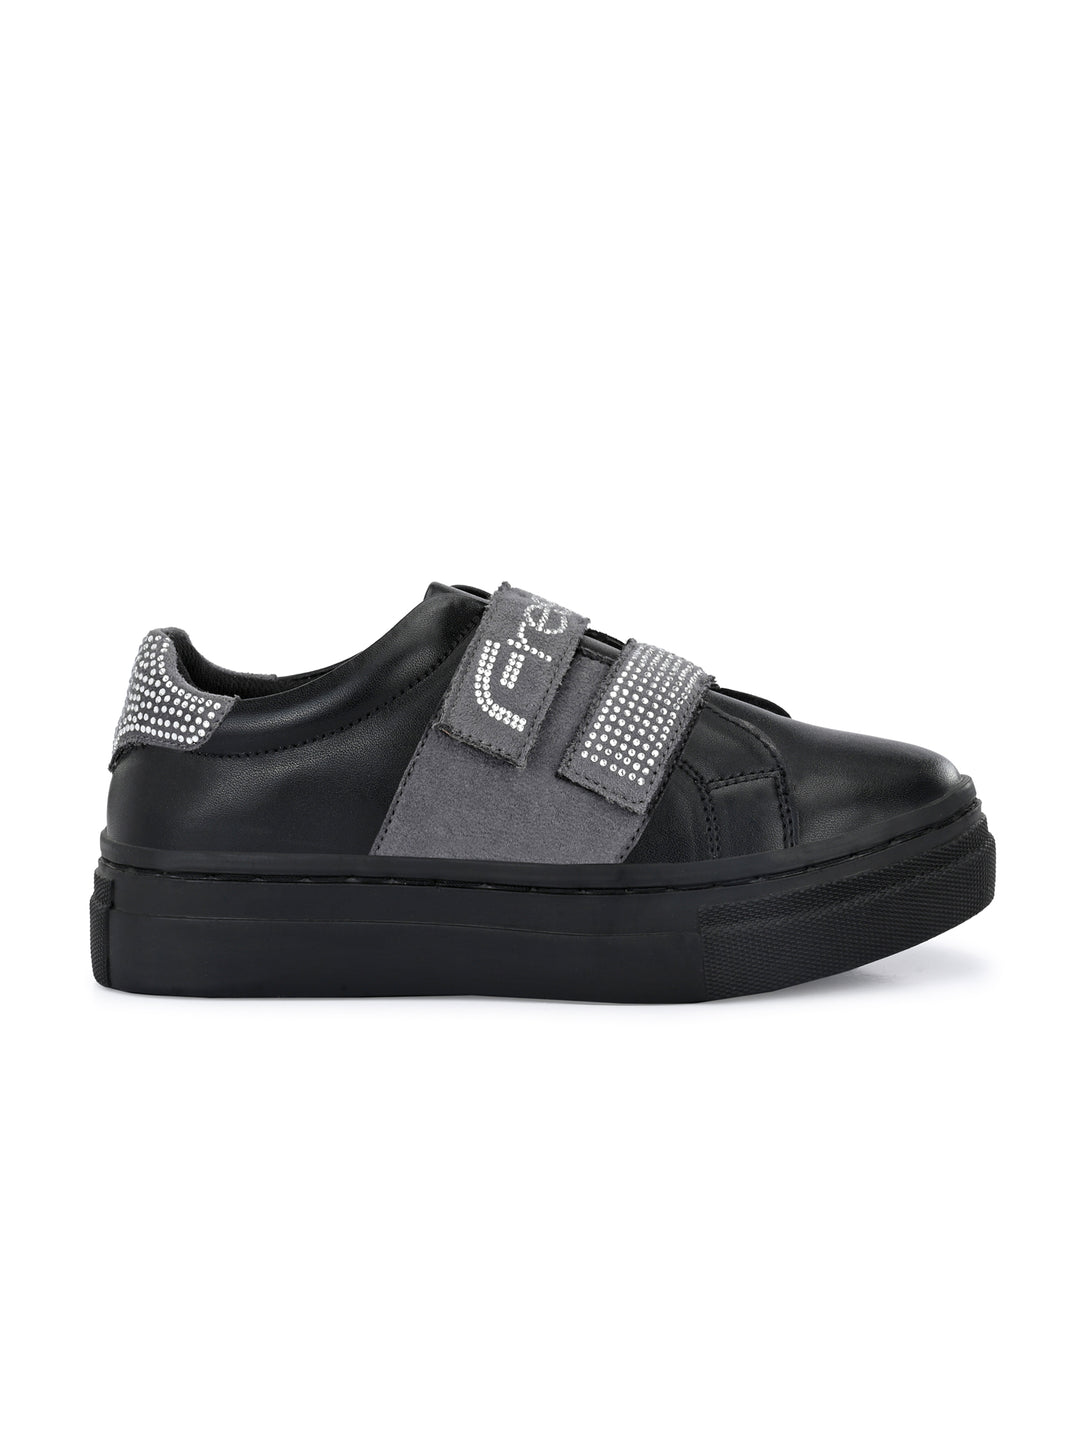 Niko Black Grey Dual Size technology Shoes for Kids